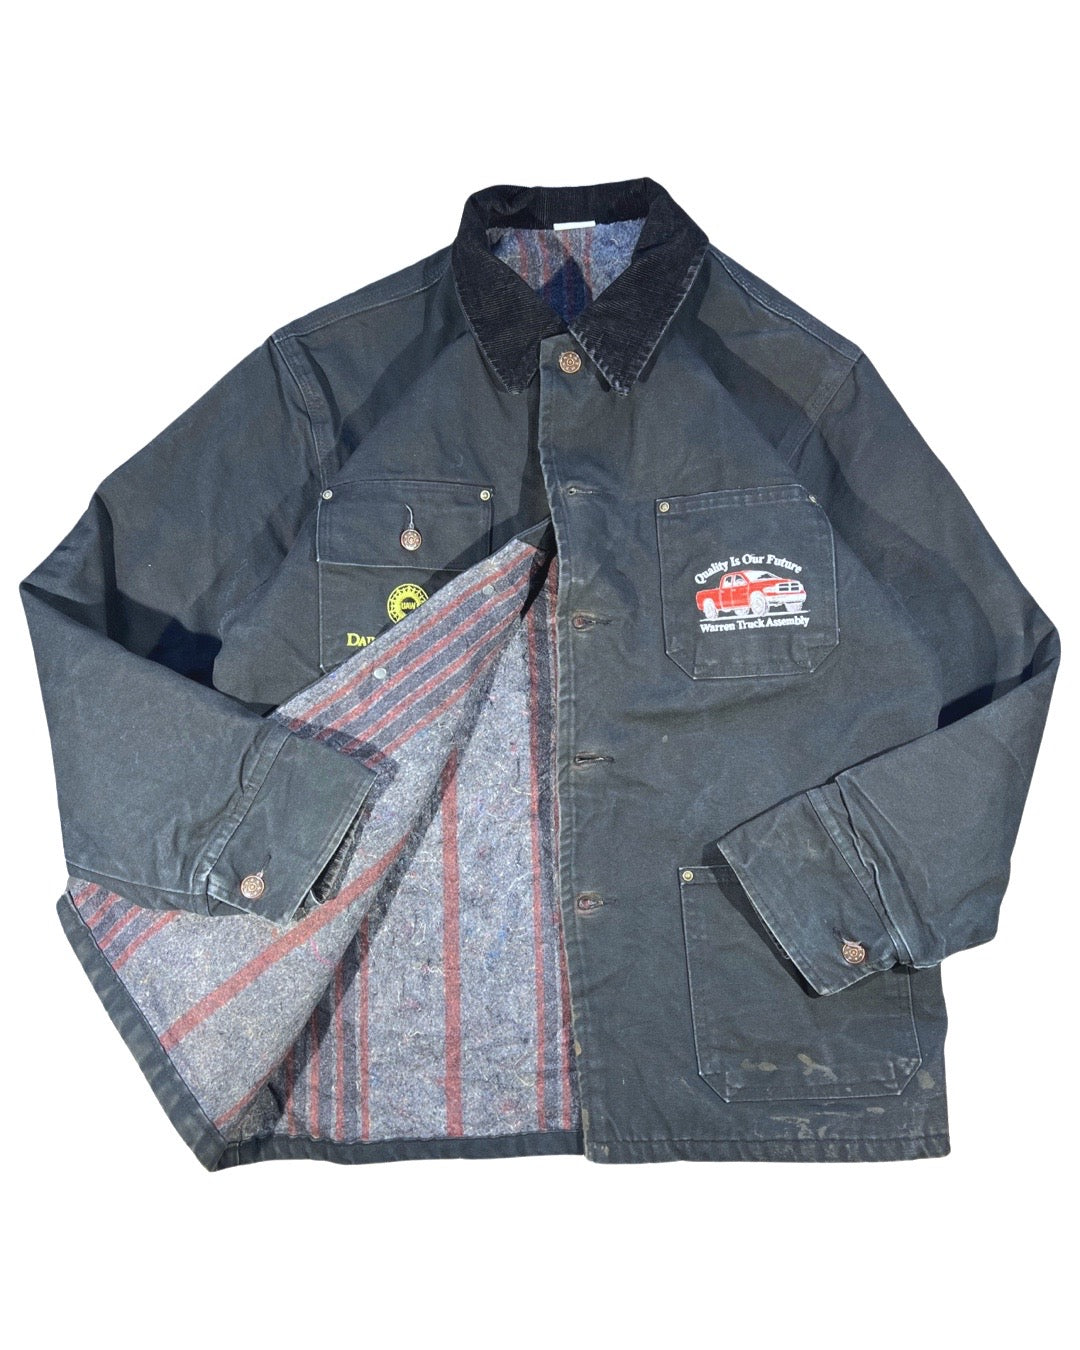 Vintage Work Jacket - M